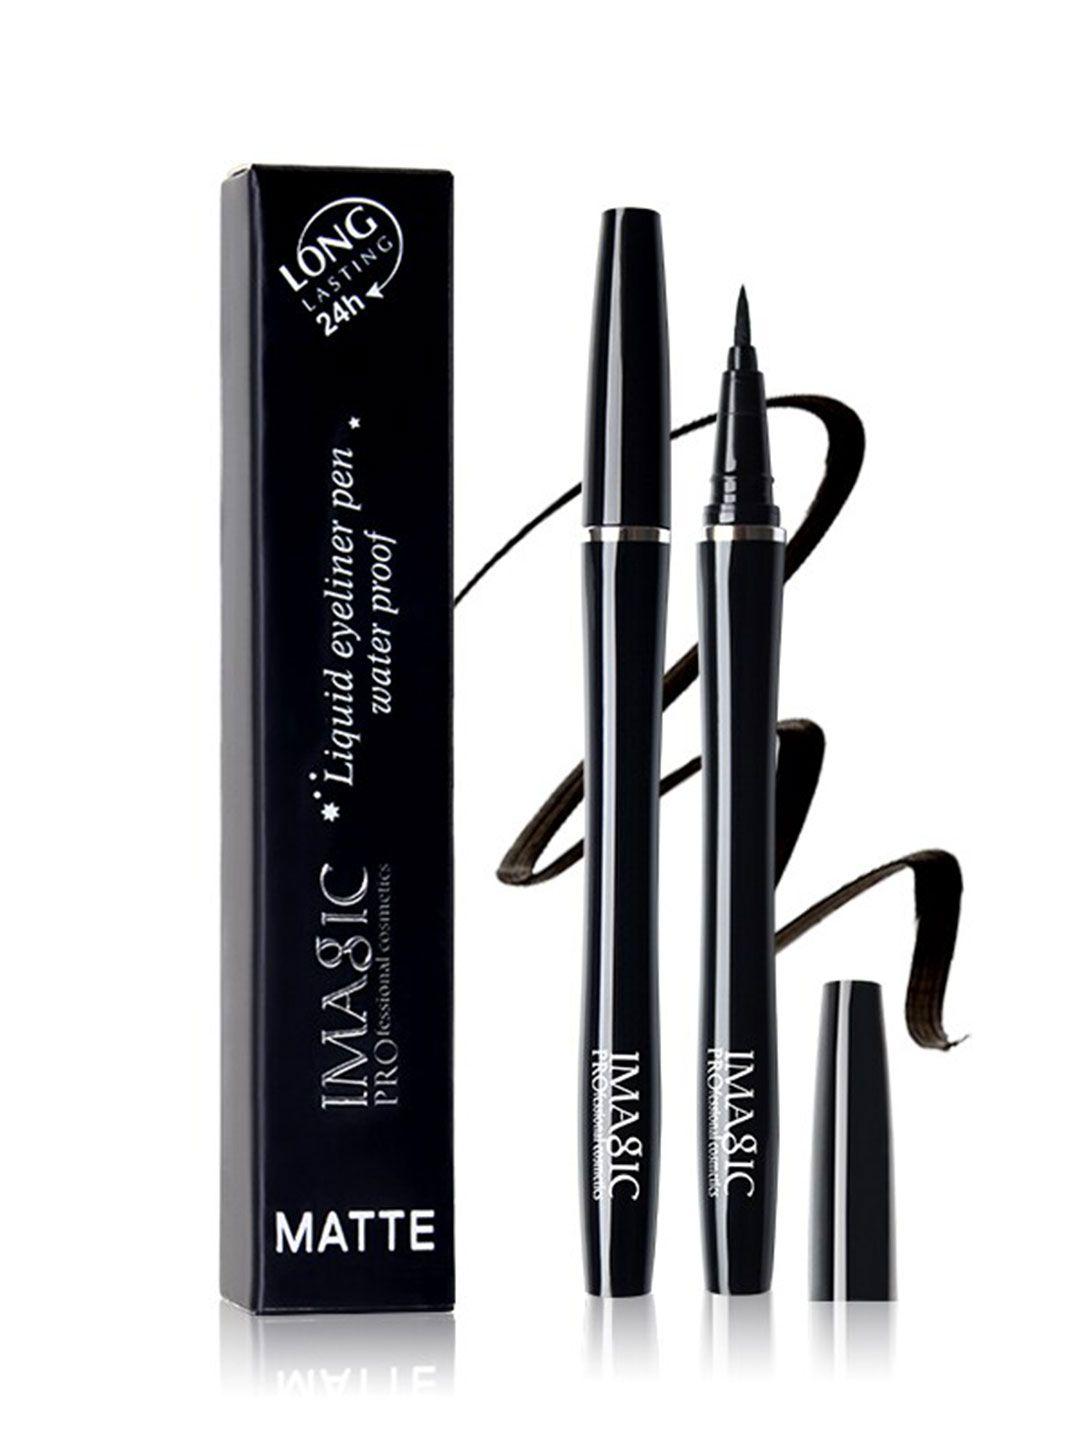 imagic waterproof & long-lasting matte finish liquid eyeliner pen 2.5g - black